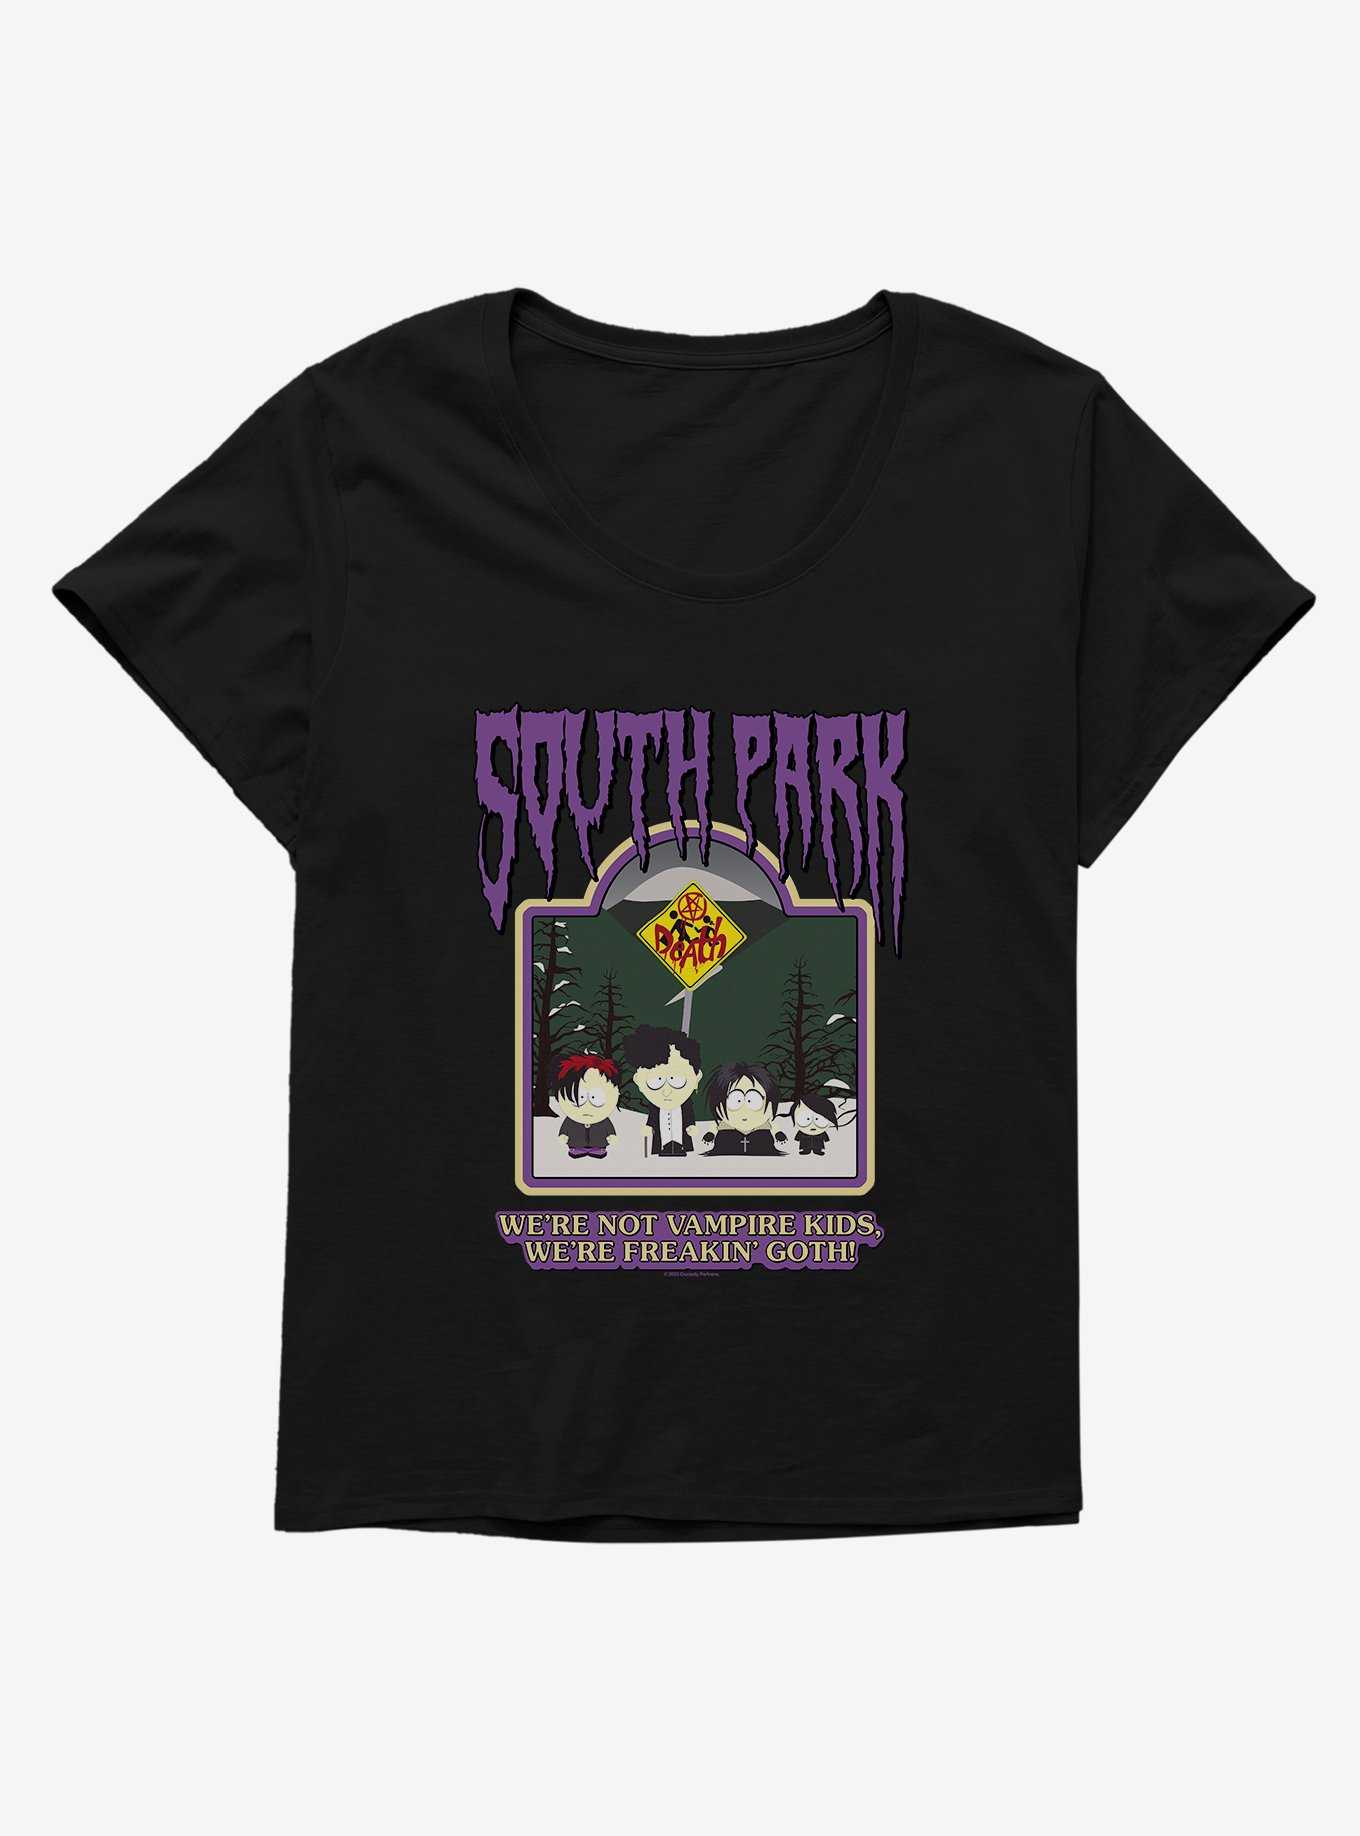 South Park We're Freakin Goth! Girls T-Shirt Plus Size, , hi-res